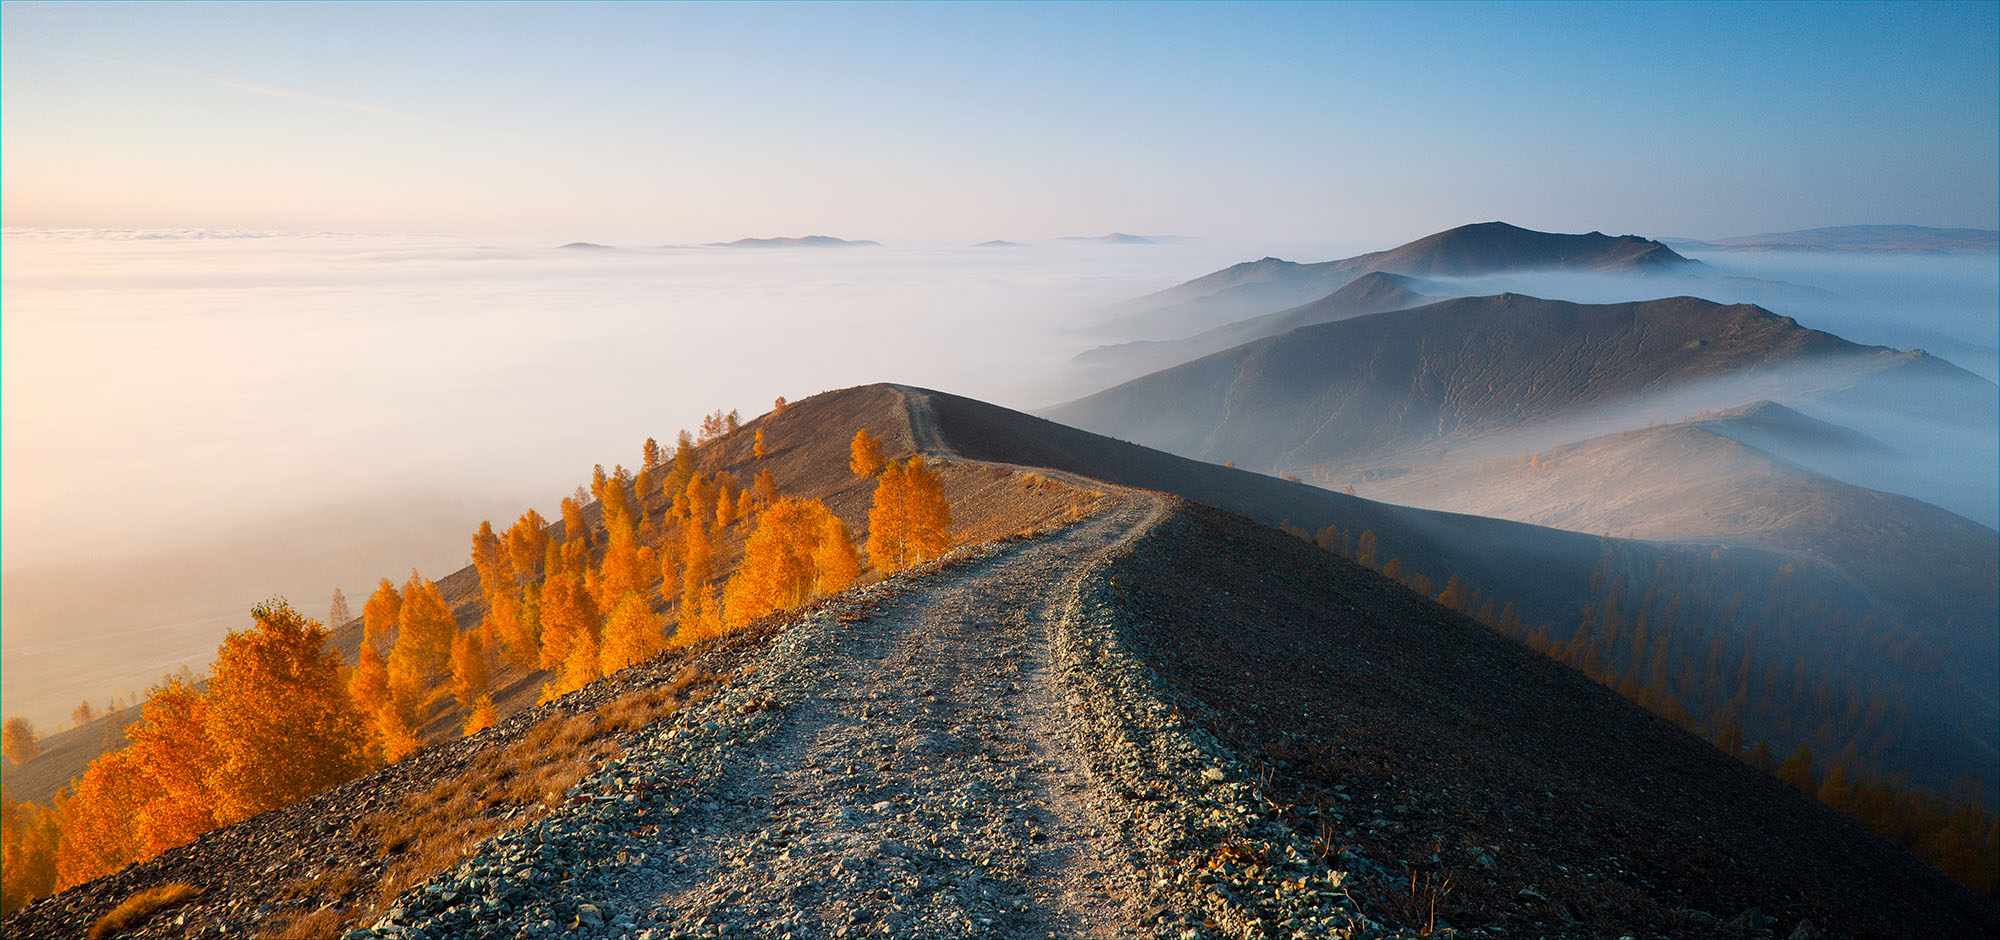 Sunrise at Karabash Mountain, South Urals, Russia - September 2014 ----------------------- Утро на горе Карабаш, Южный Урал, Россия - Сентябрь 2014